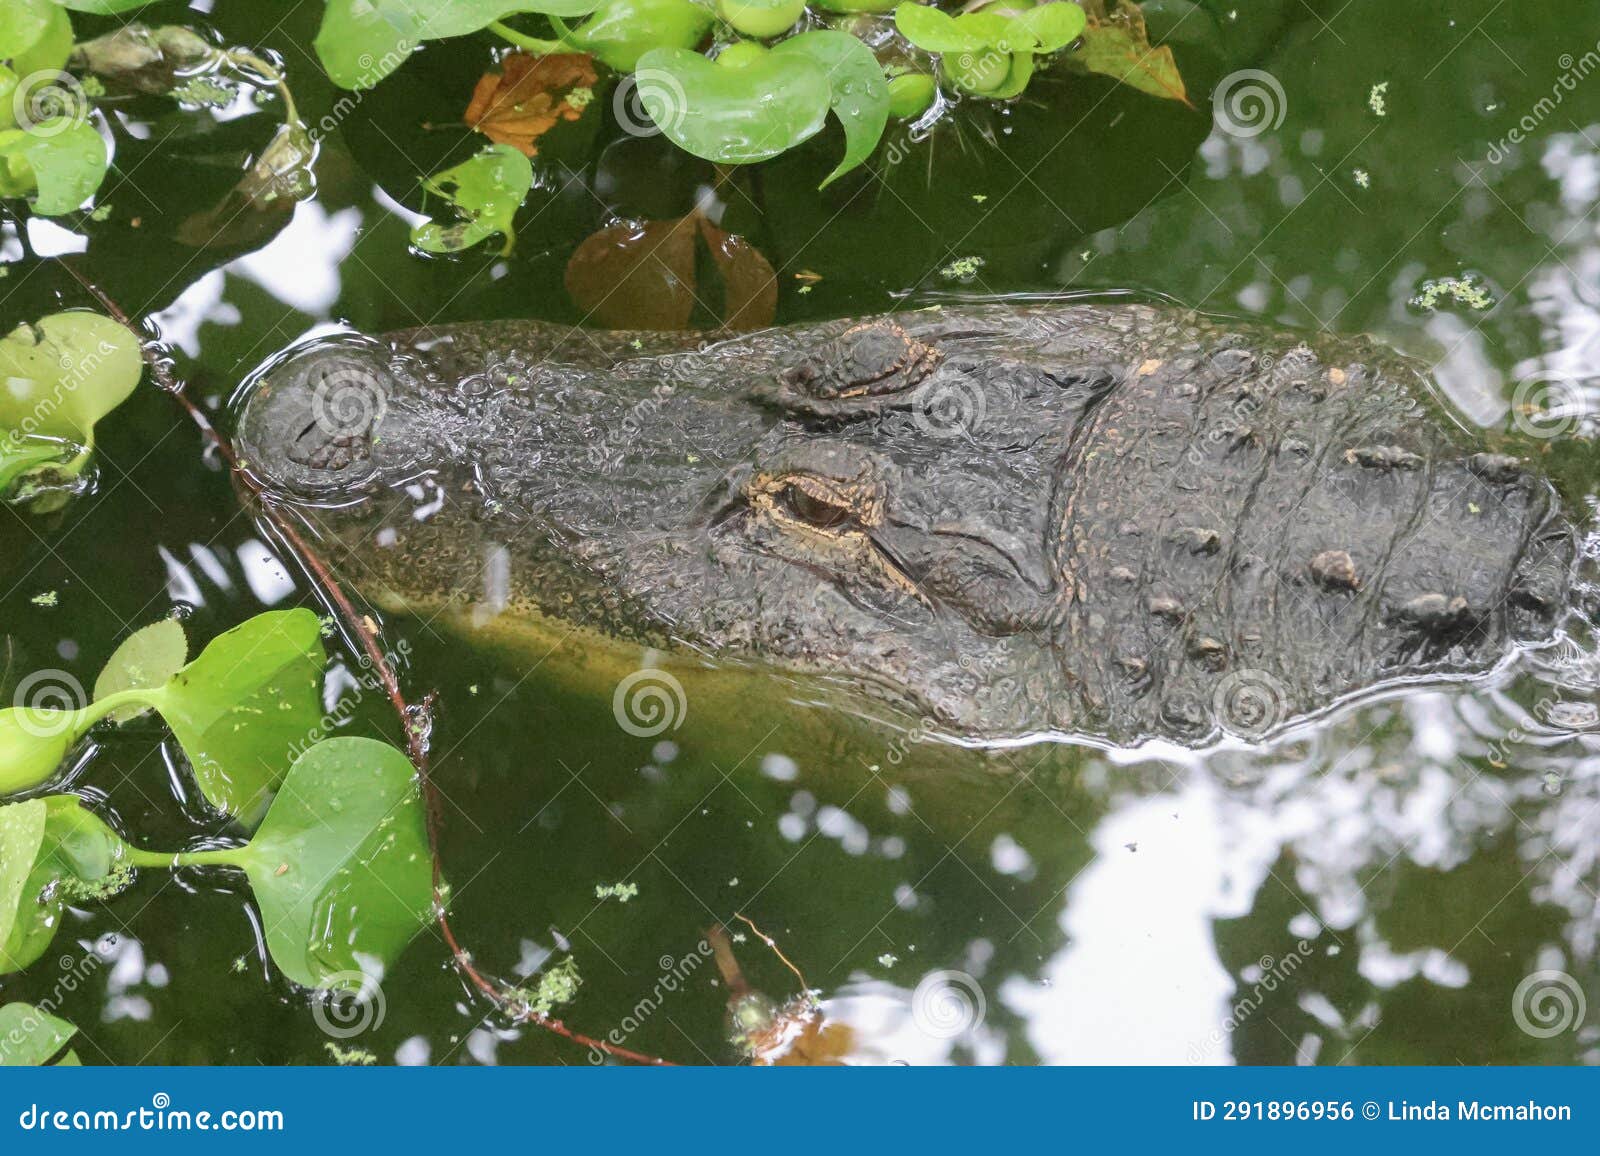 Alligator found in Maryland pond near Chesapeake Bay - The Washington Post